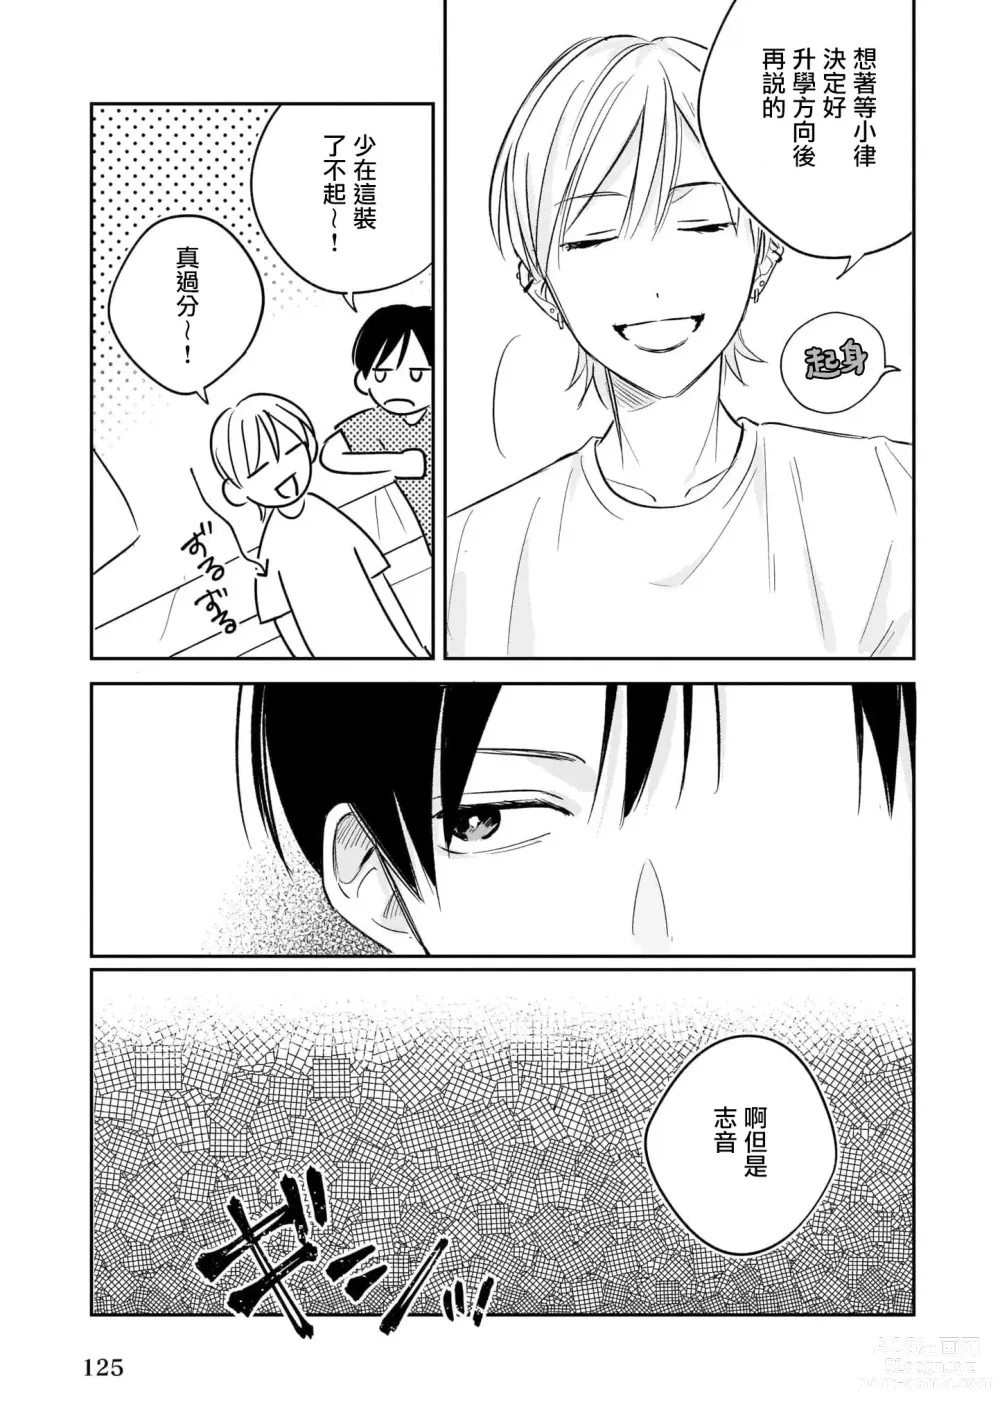 Page 22 of manga 无敌的baby blue #03